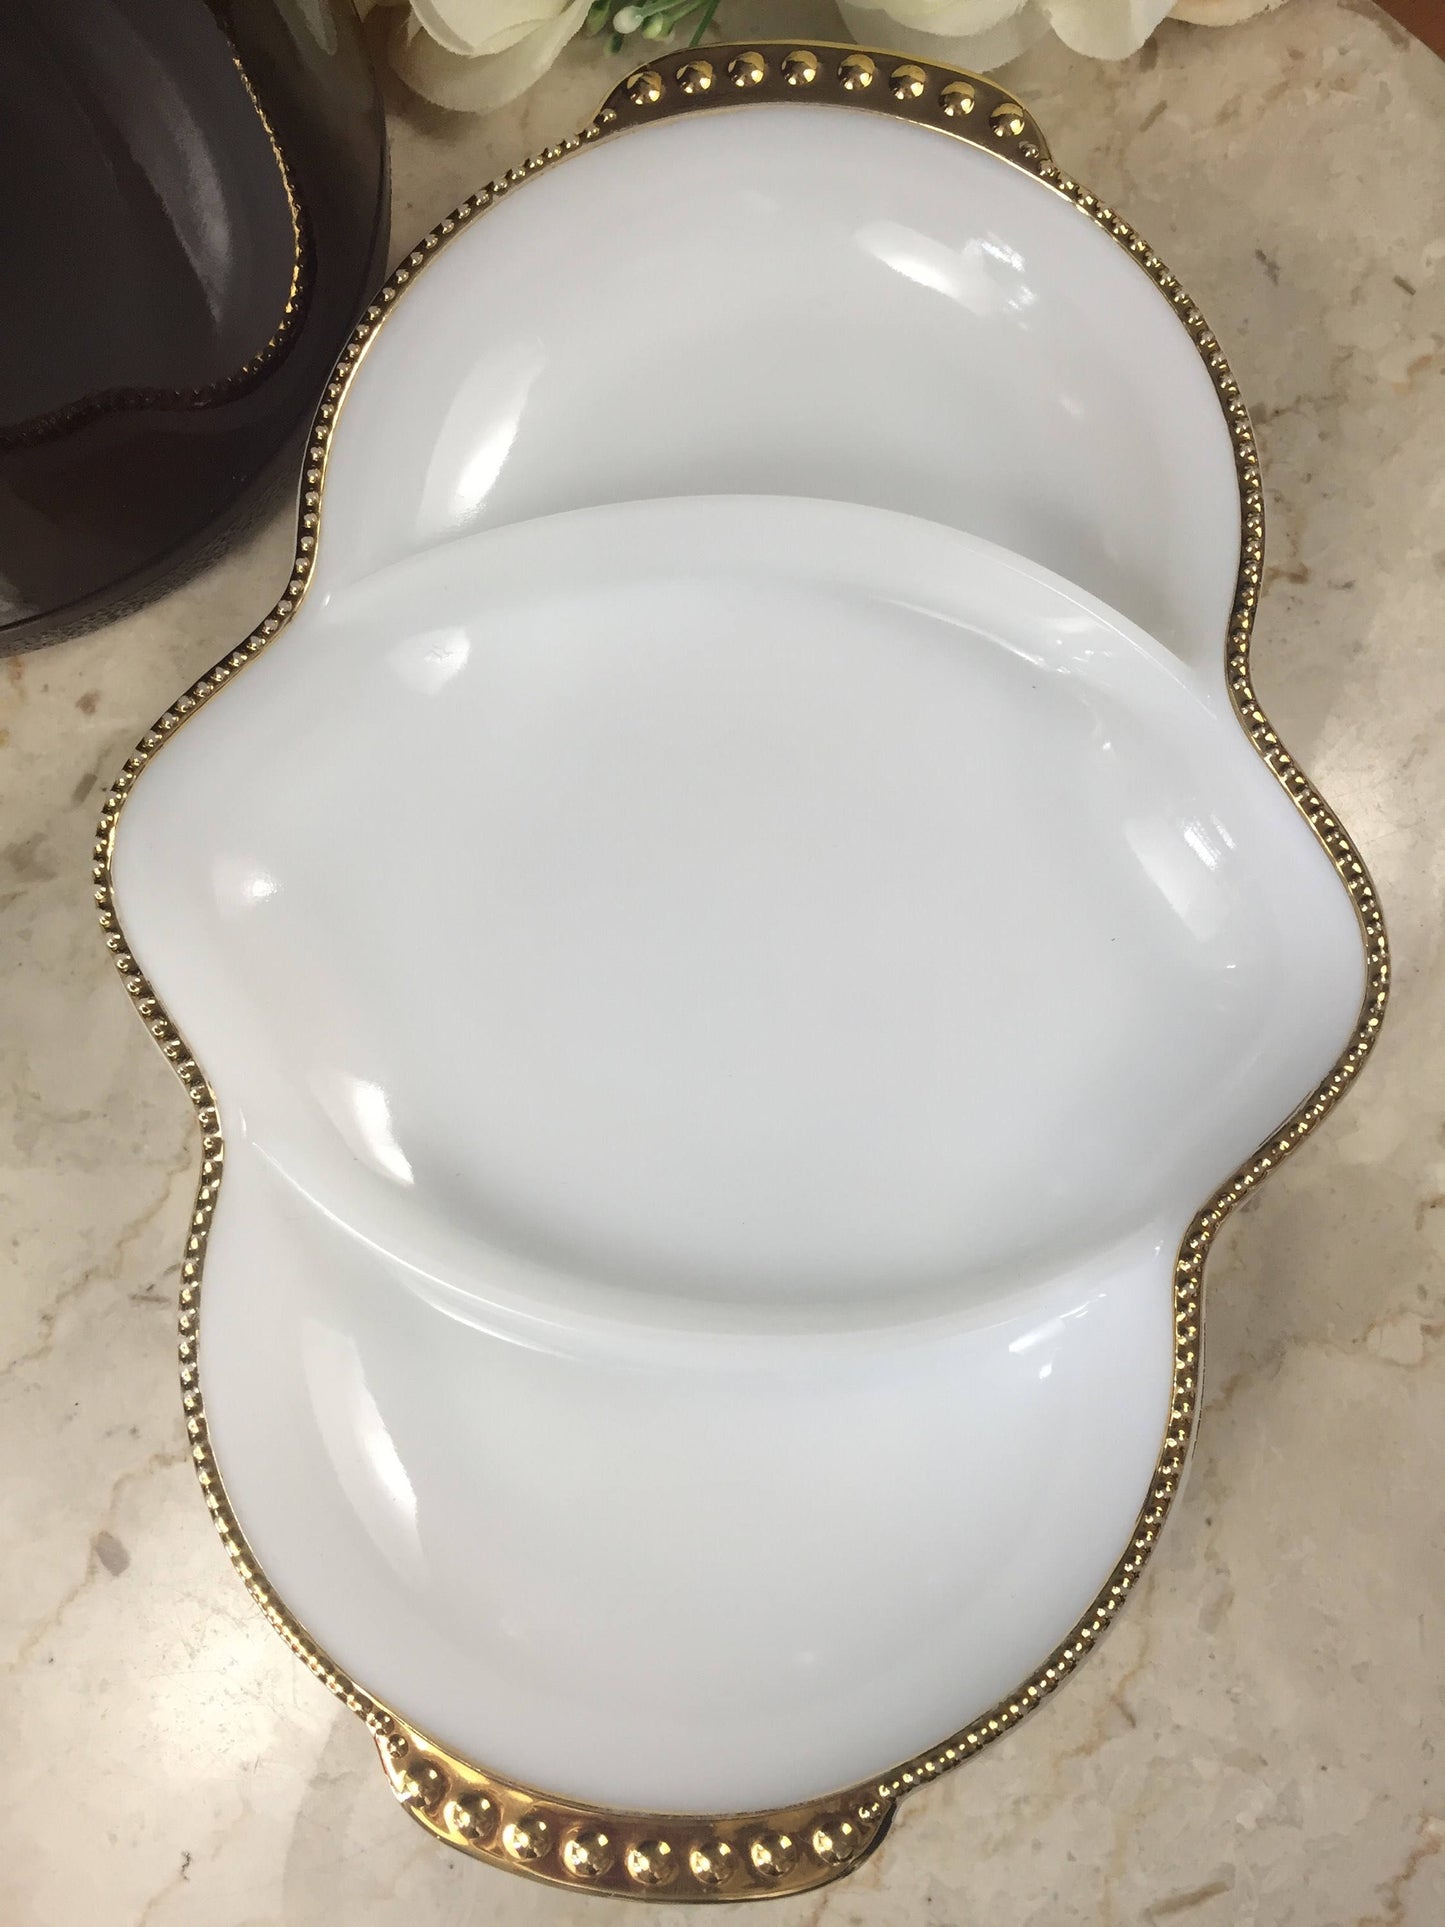 Fire King Milk Glass Divided Dish-Vintage Serving Dish-White Serving Dish-White and Gold Decor-Vintage Wedding Decor